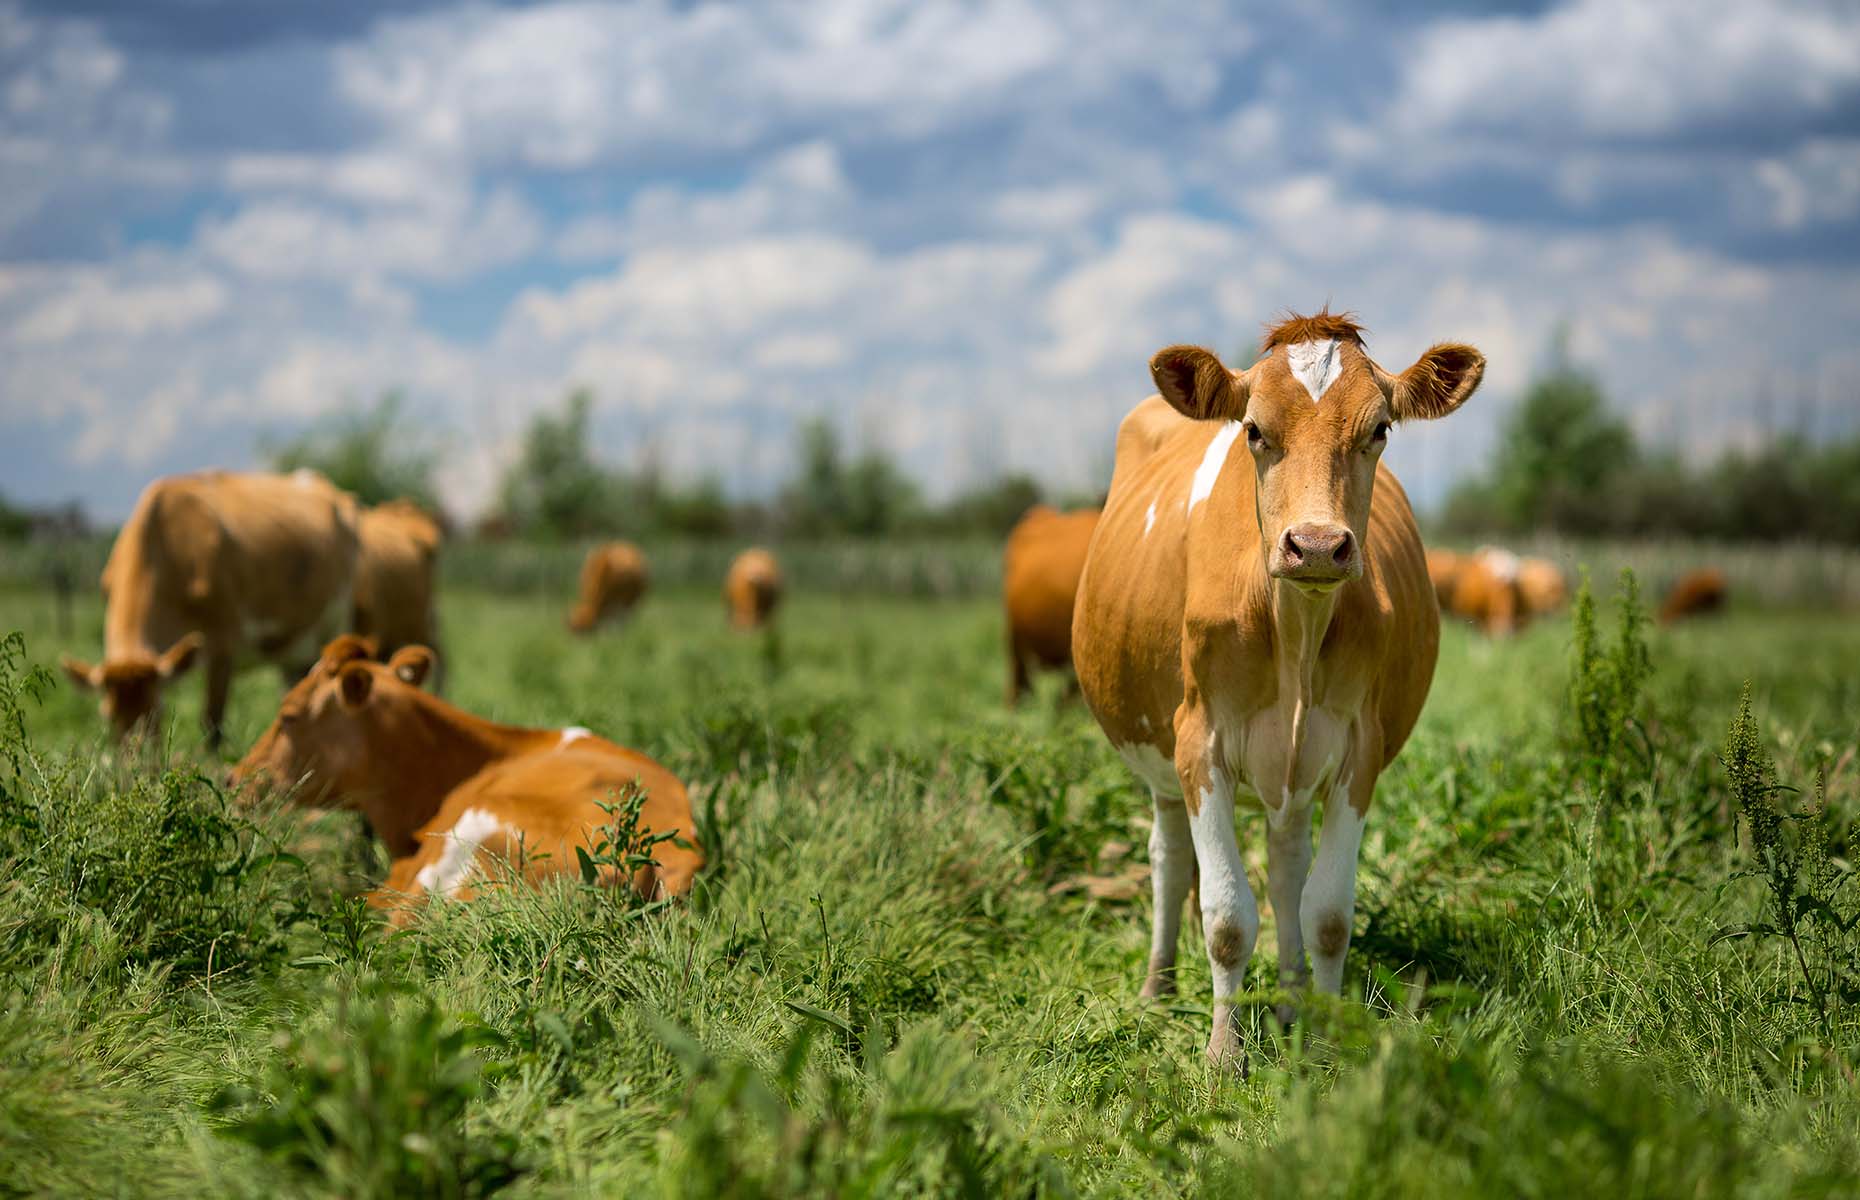 Guernsey dairy cow (Image: Vinai Suwanidcharoen/Shutterstock)